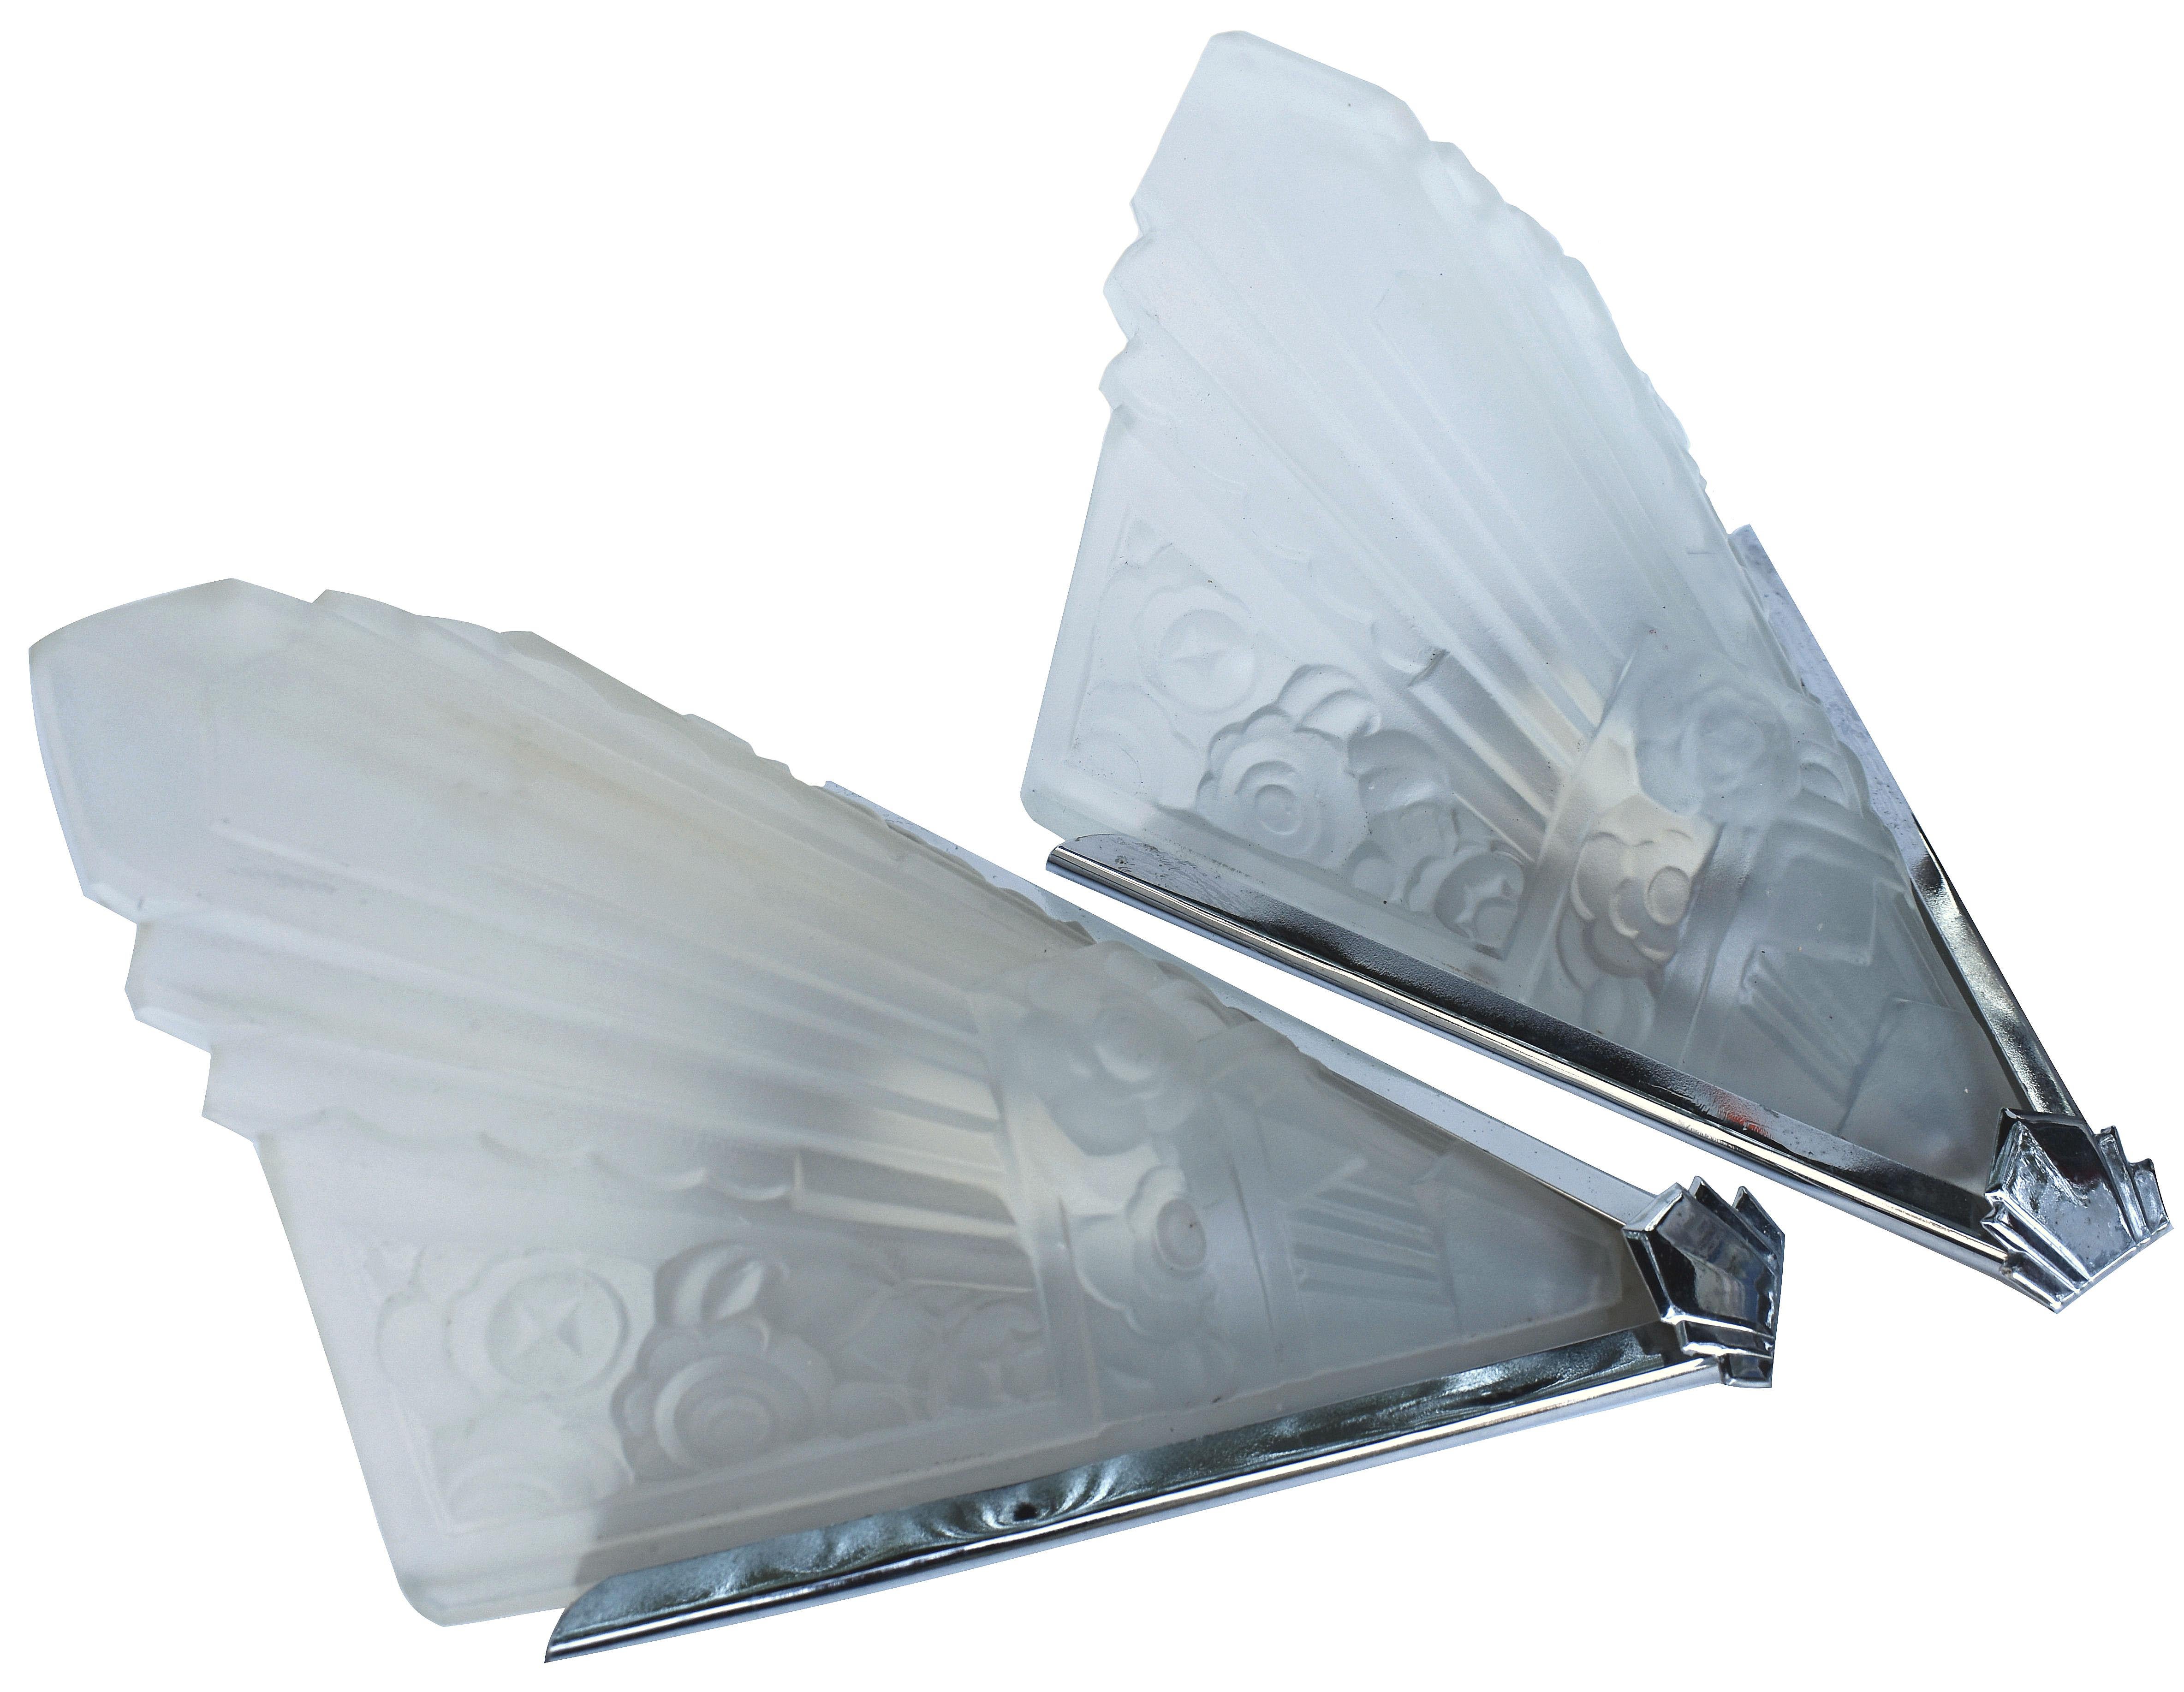 20th Century Art Deco Slip Shade Pair of Glass & Chrome Wall Light Sconces, c1930